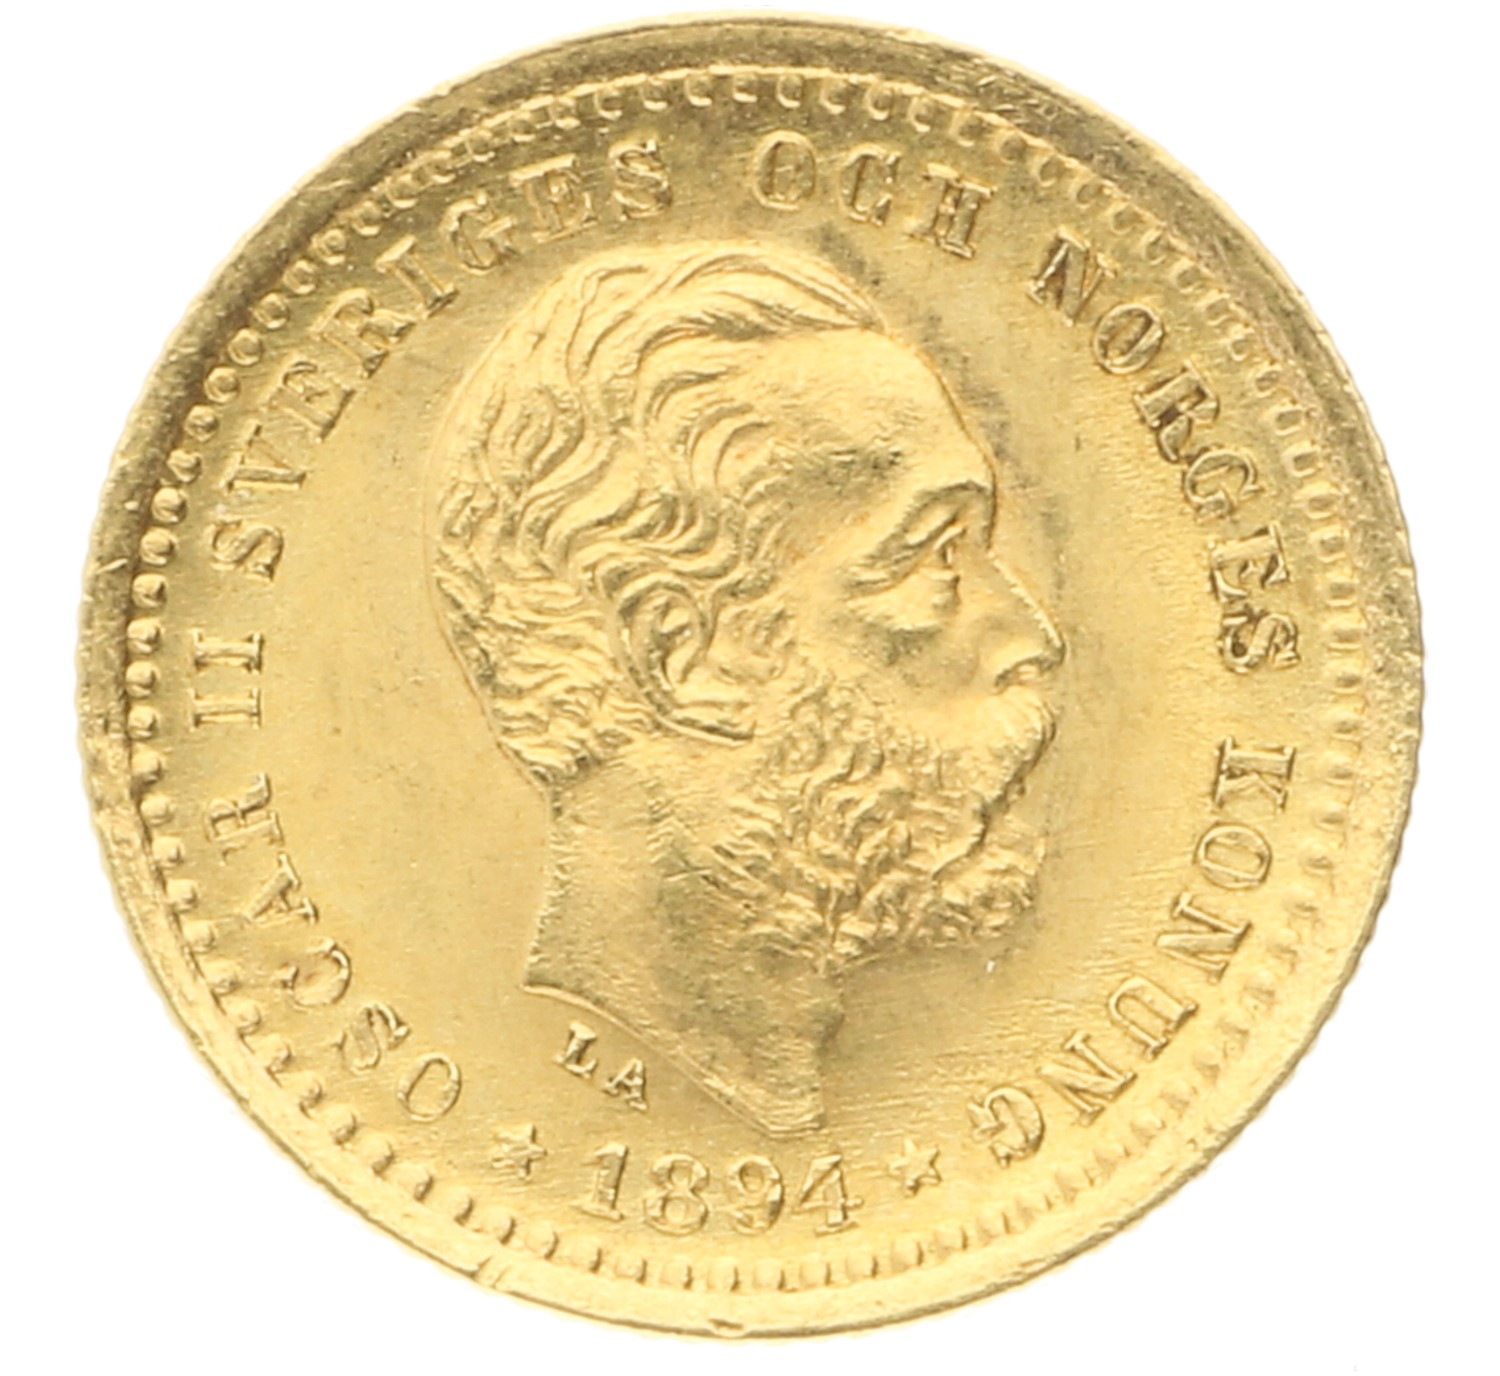 5 Kronor - Sweden - 1894